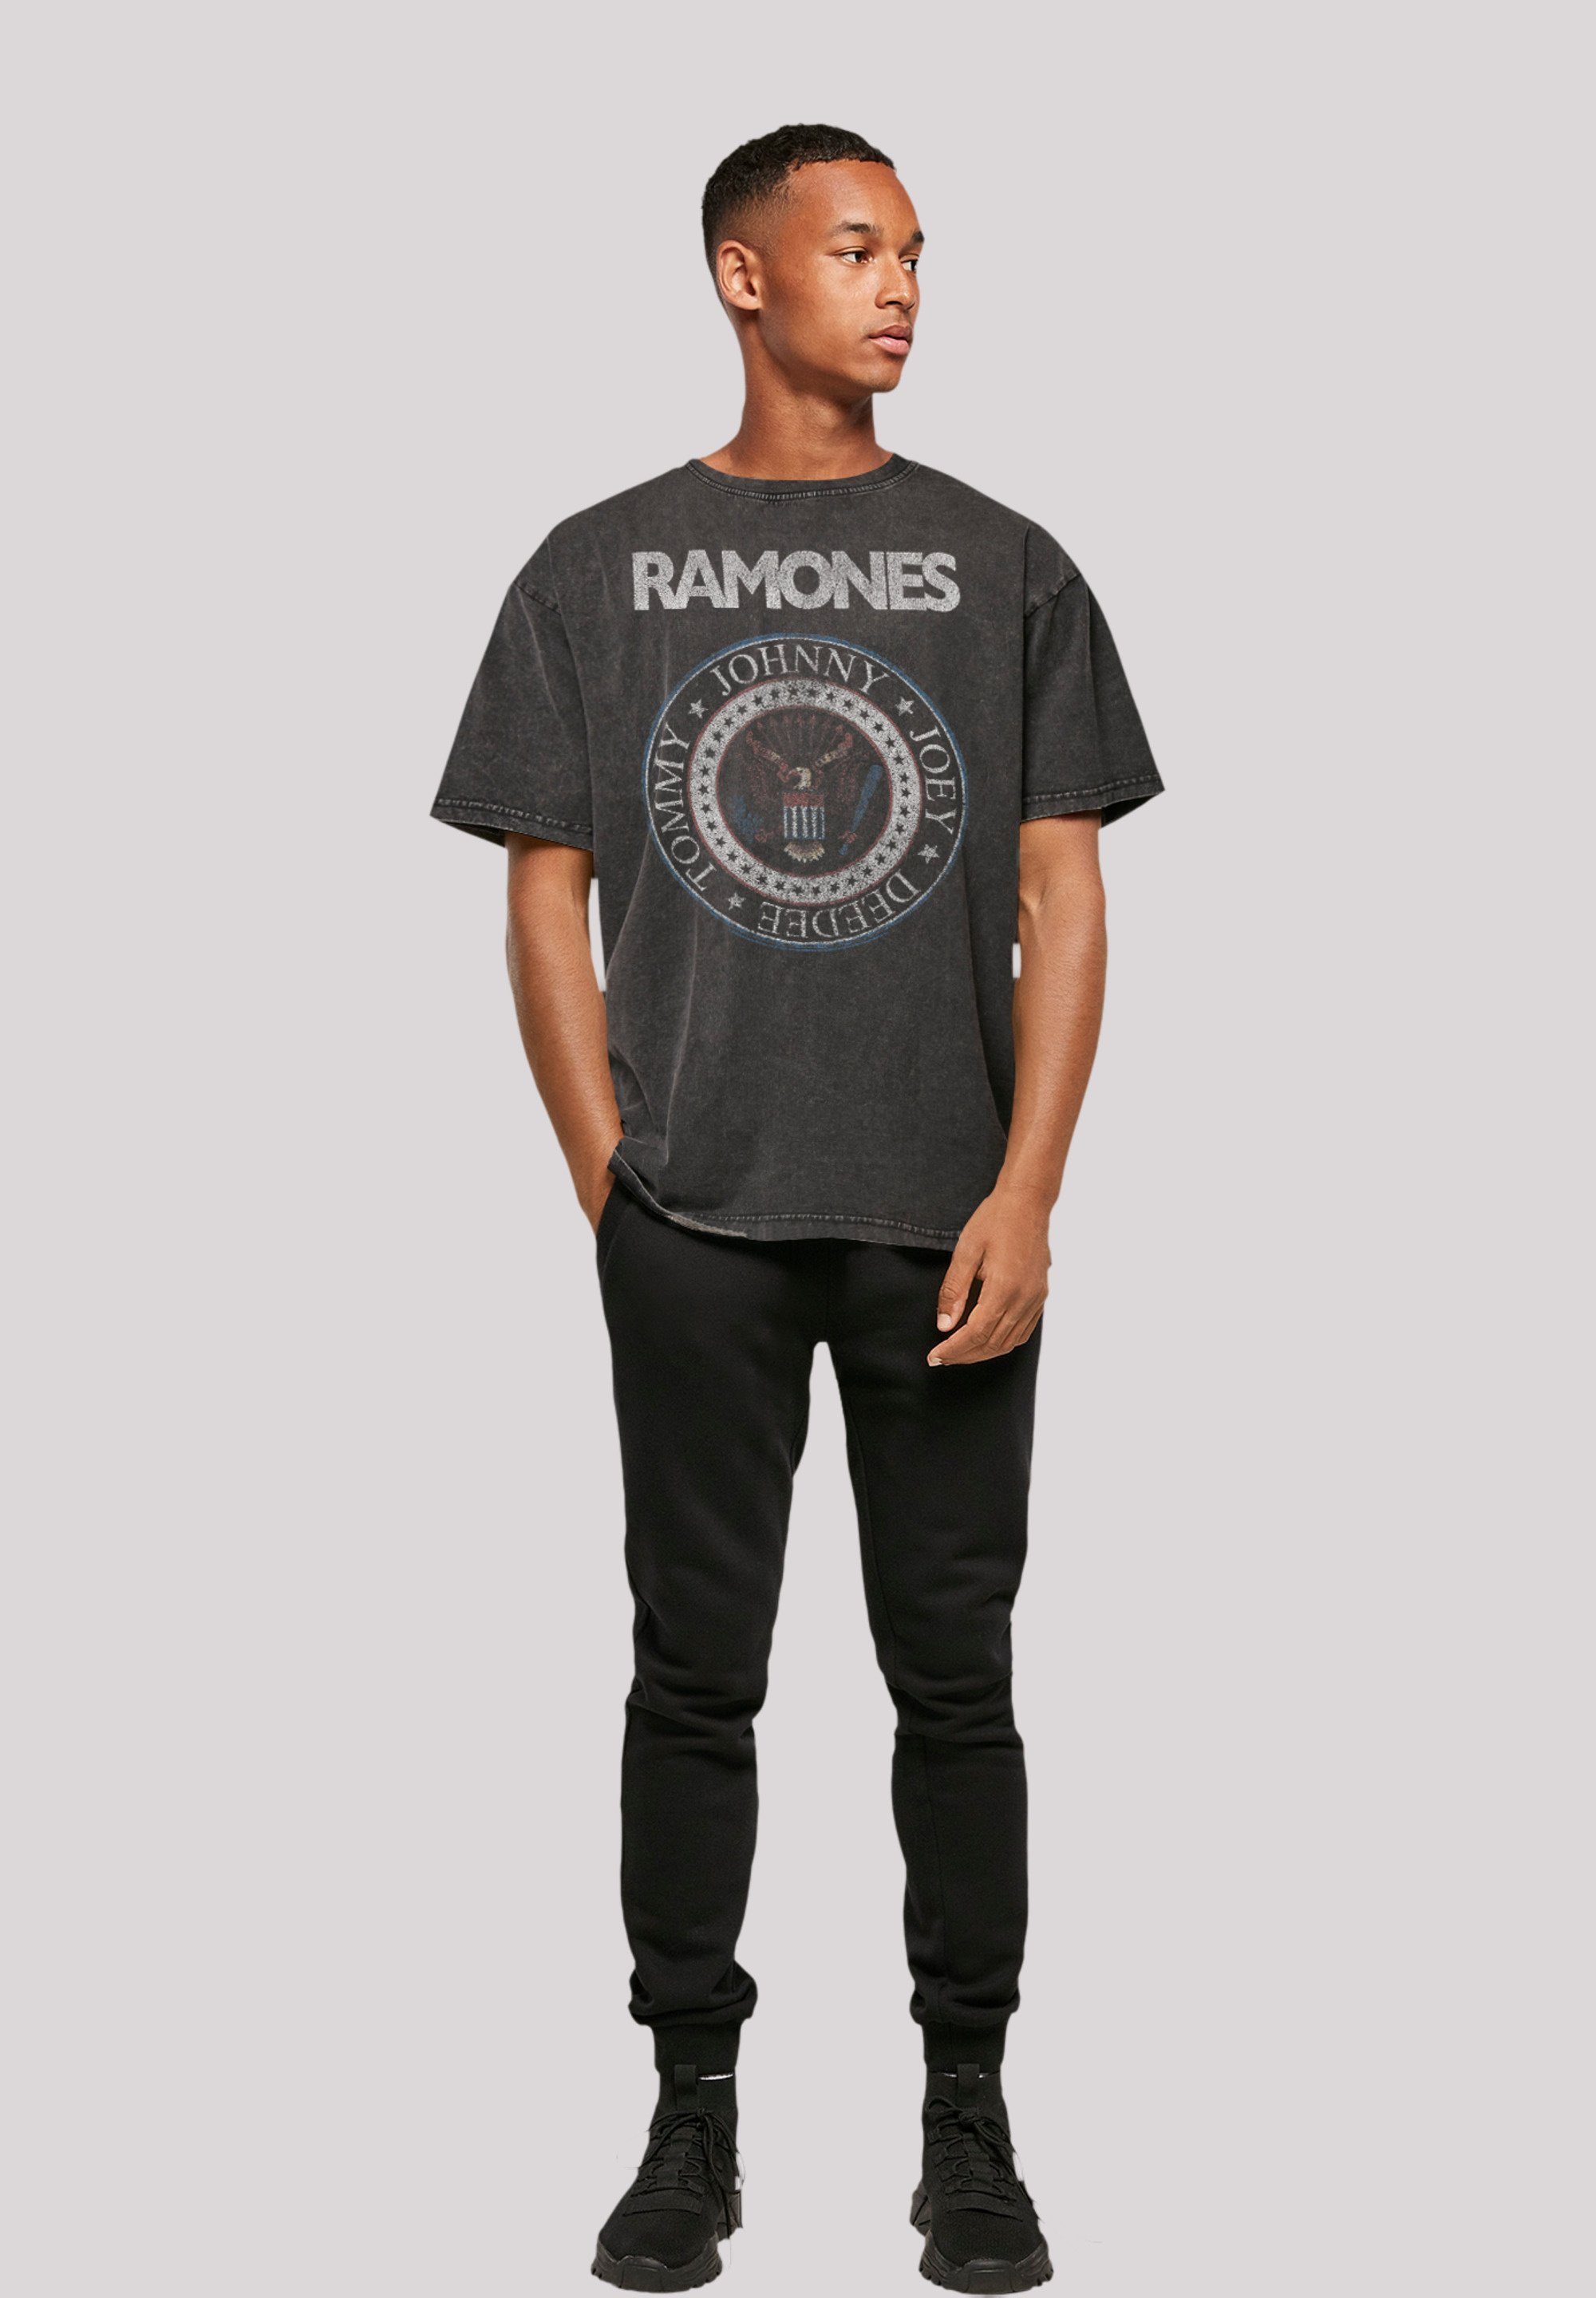 T-Shirt Rock-Musik Seal And F4NT4STIC Qualität, White Premium Rock Red Band Ramones schwarz Band, Musik